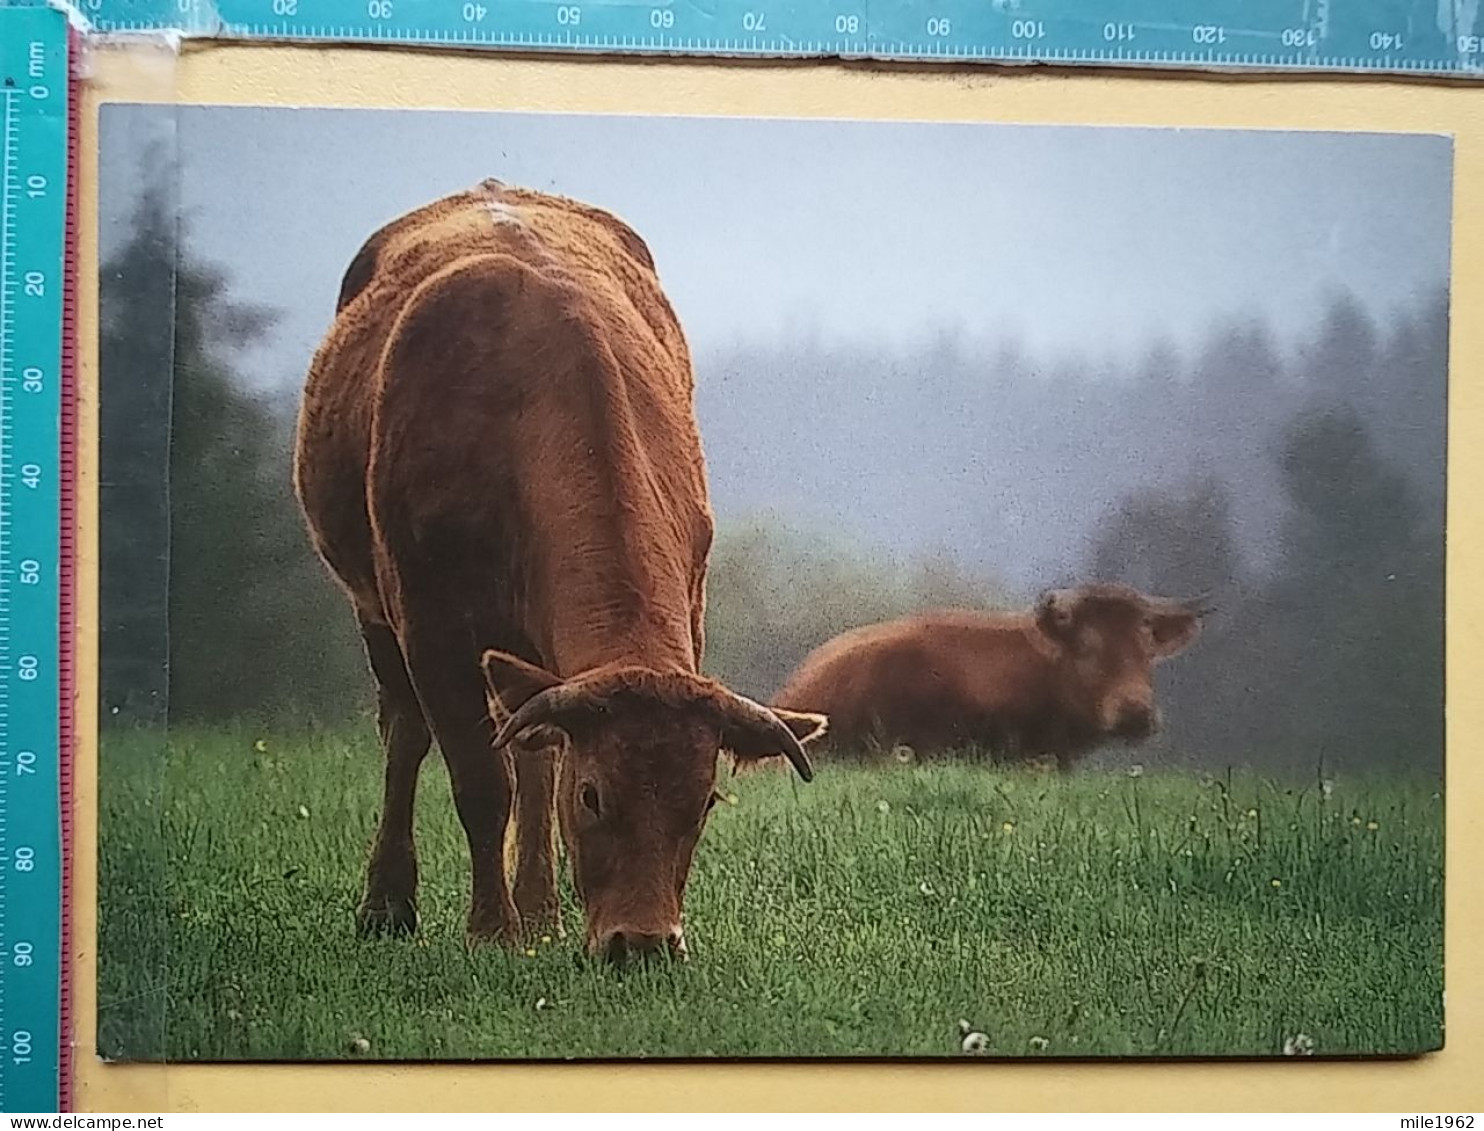 KOV 506-31 - COW, VACHE  - Kühe